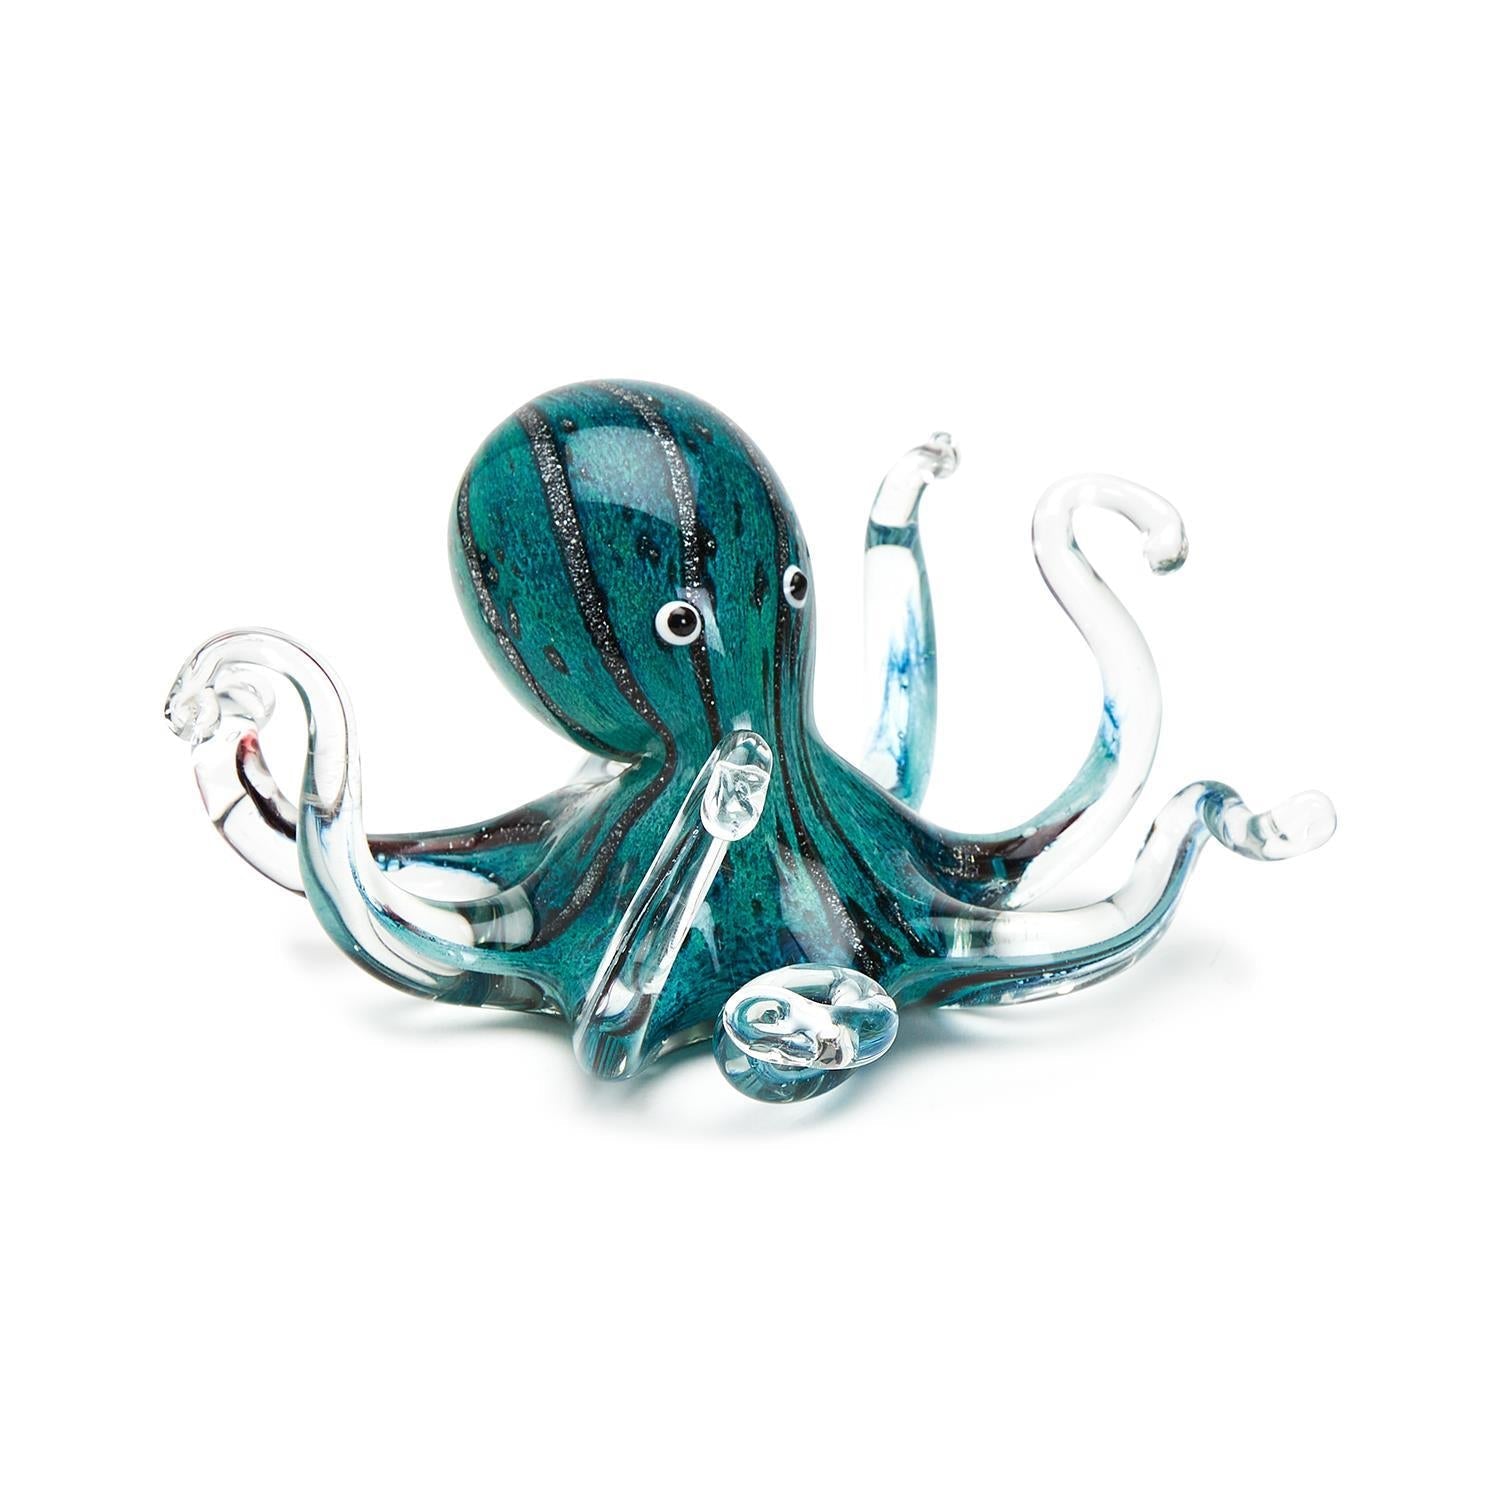 Octopus Hand-Blown Glass Figurine